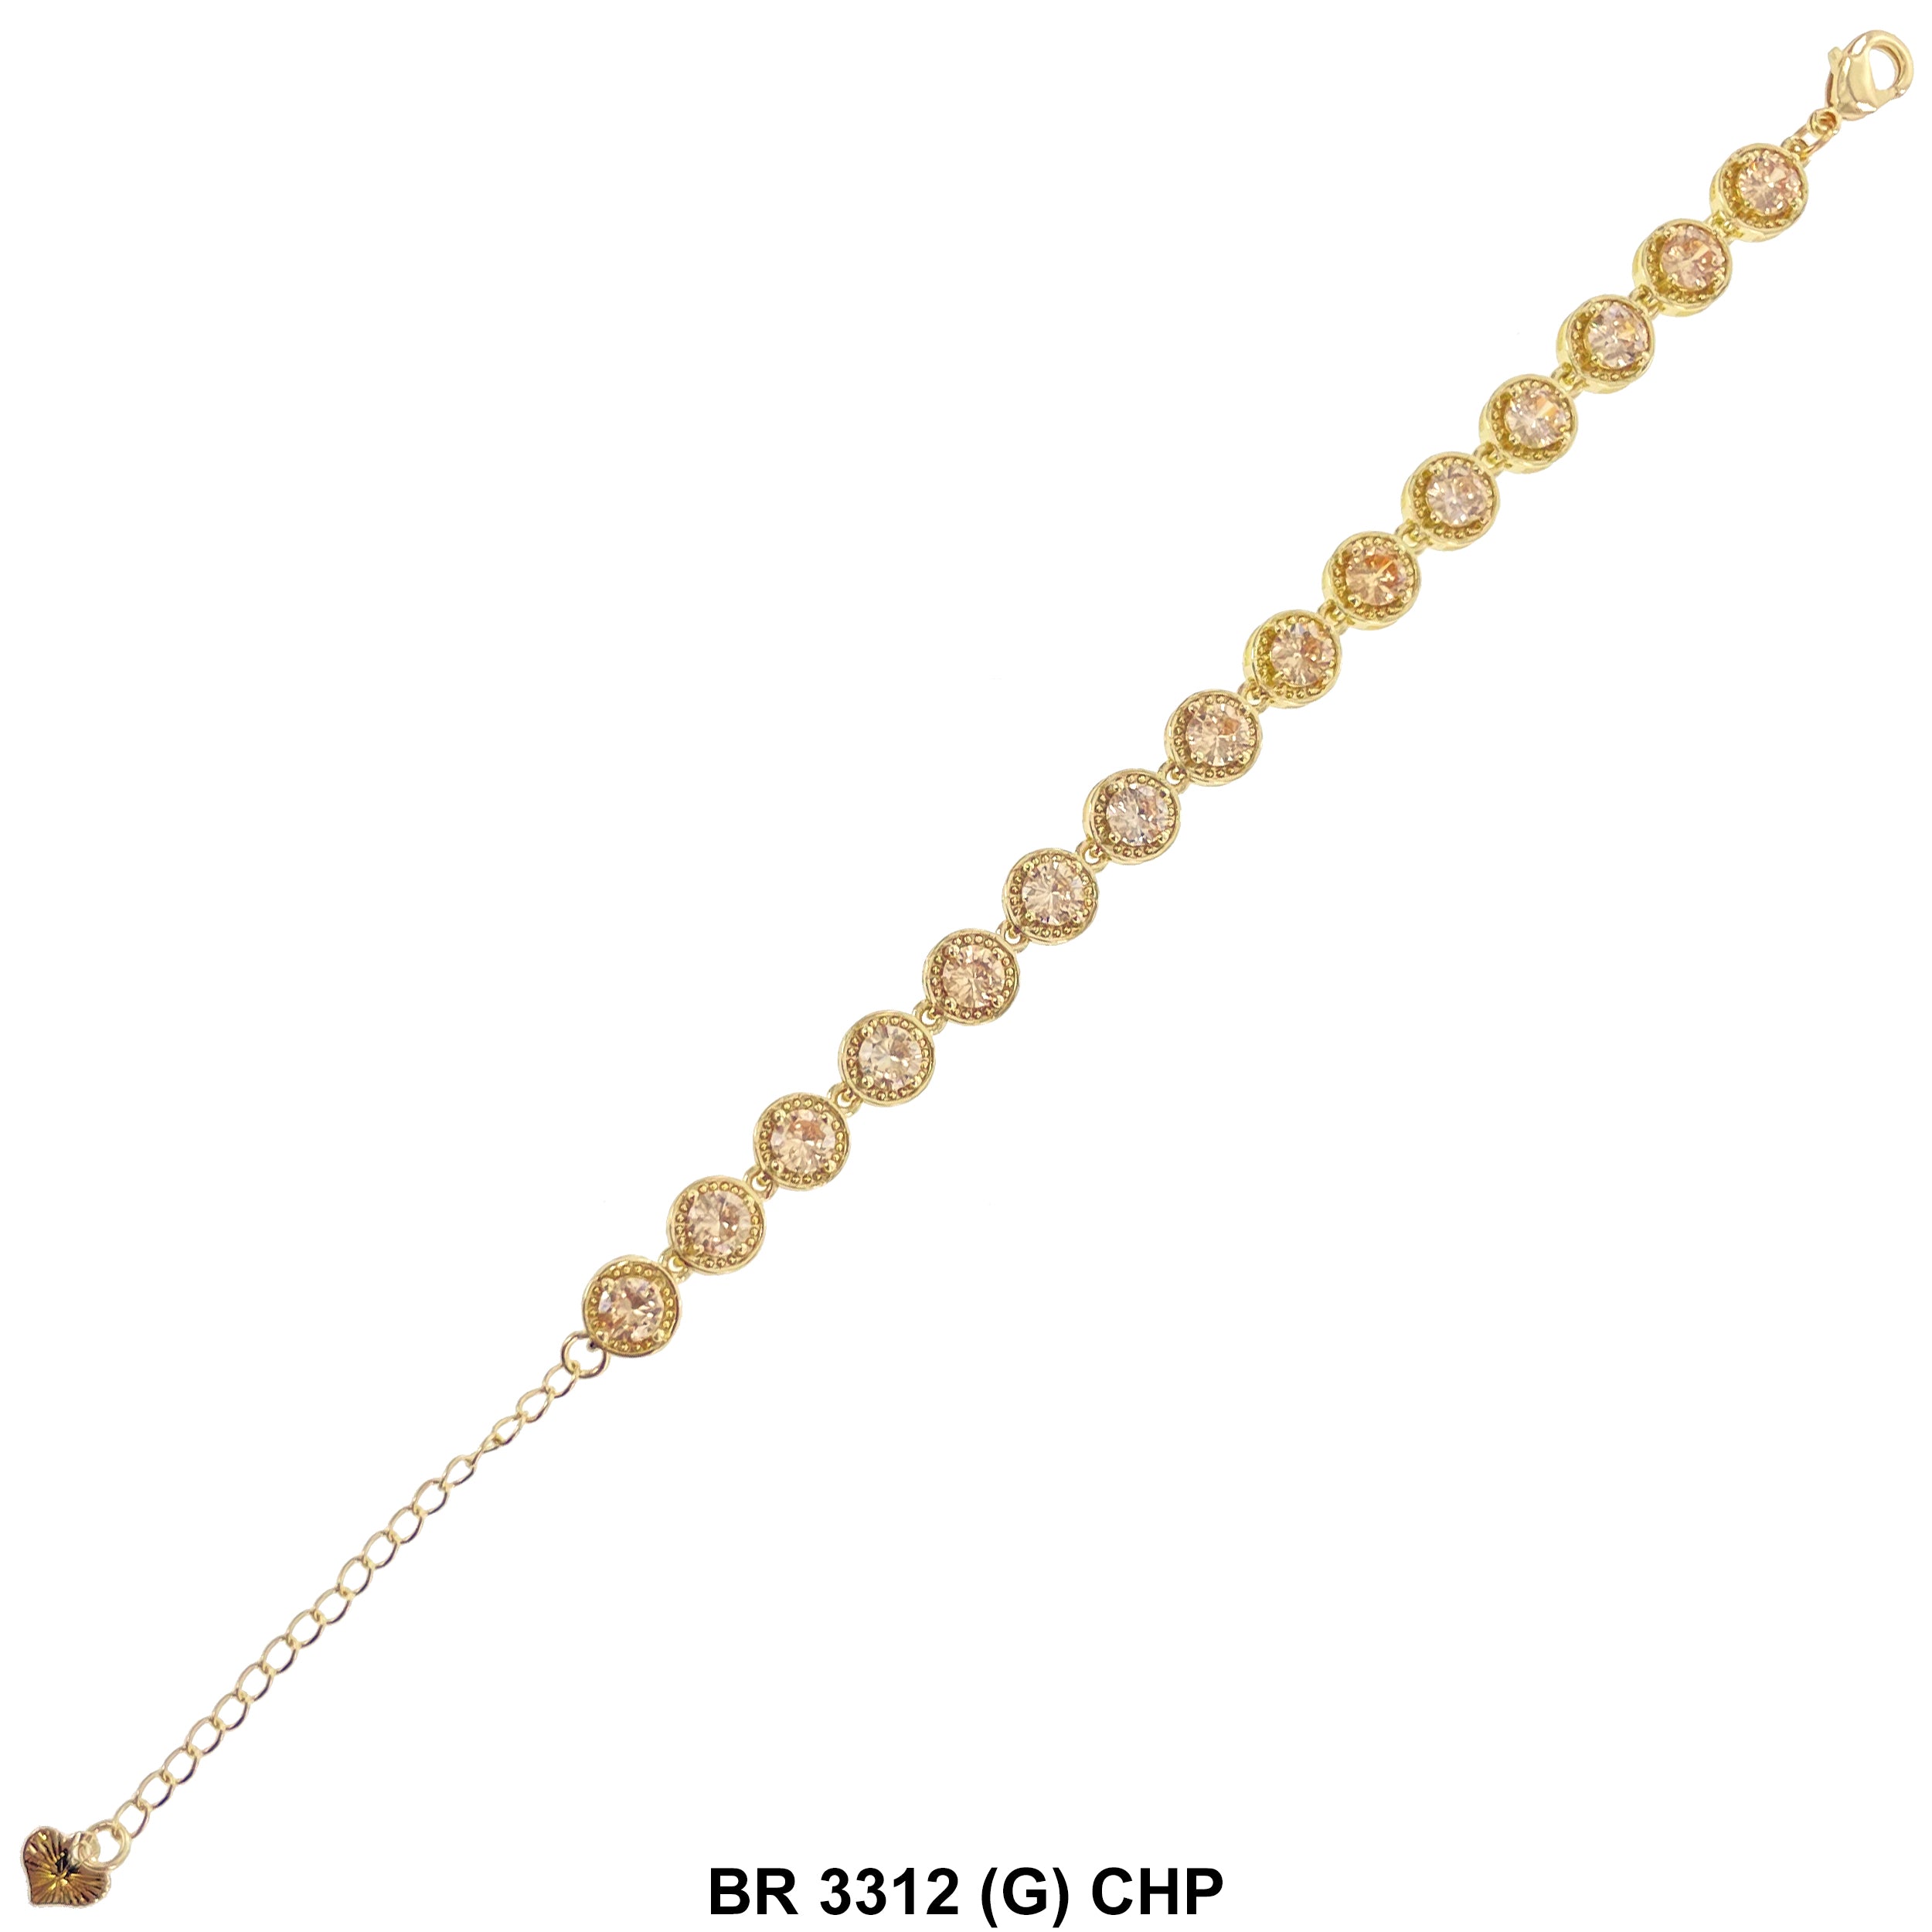 Cubic Zirconia Tennis Bracelet BR 3312 (G) CHP